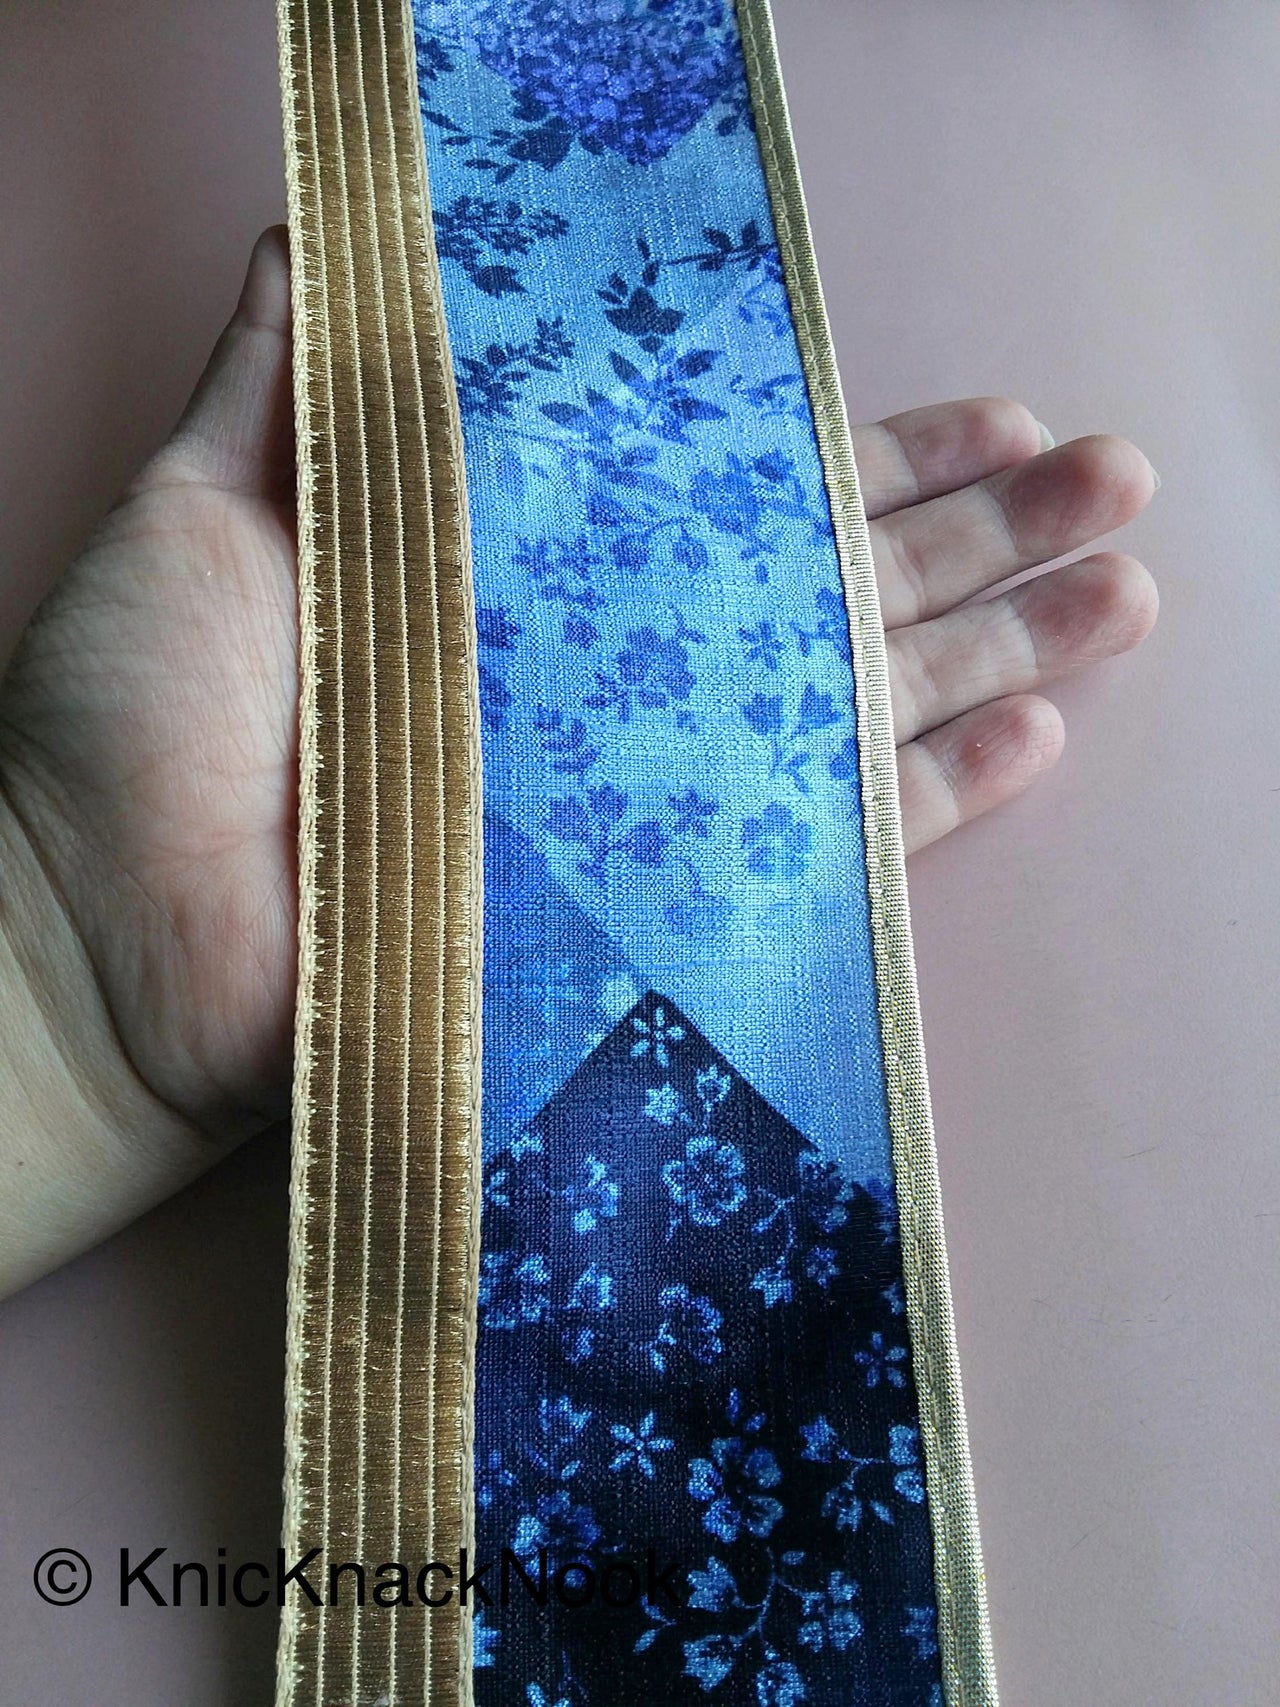 Blue And Gold Fabric Trim With Floral Design, Digital Print Trim Border - 200317L407